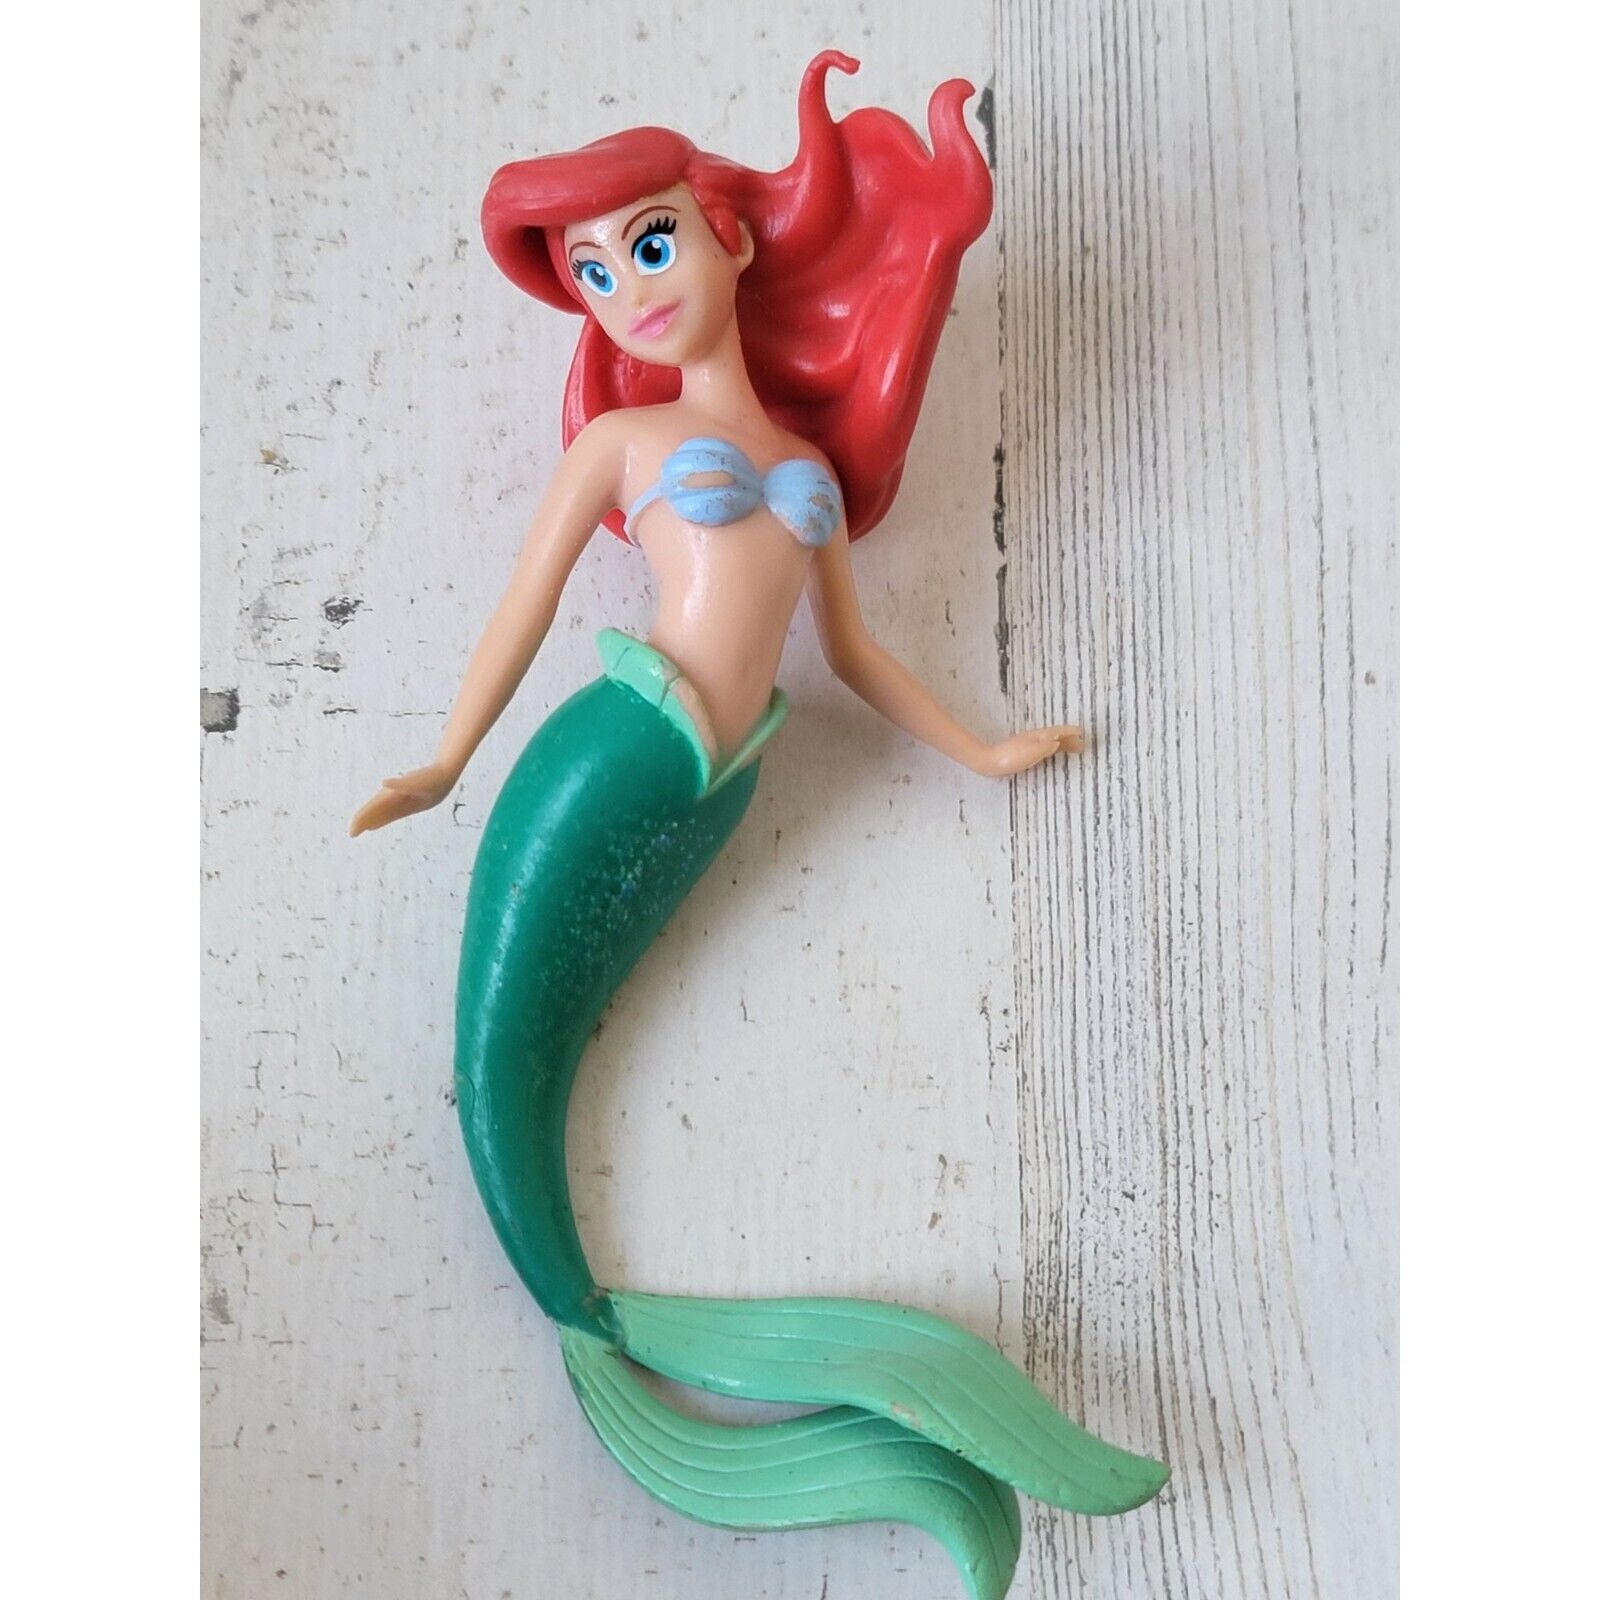 Swimways Ariel princess Little Mermaid Disney Pixar toy figure